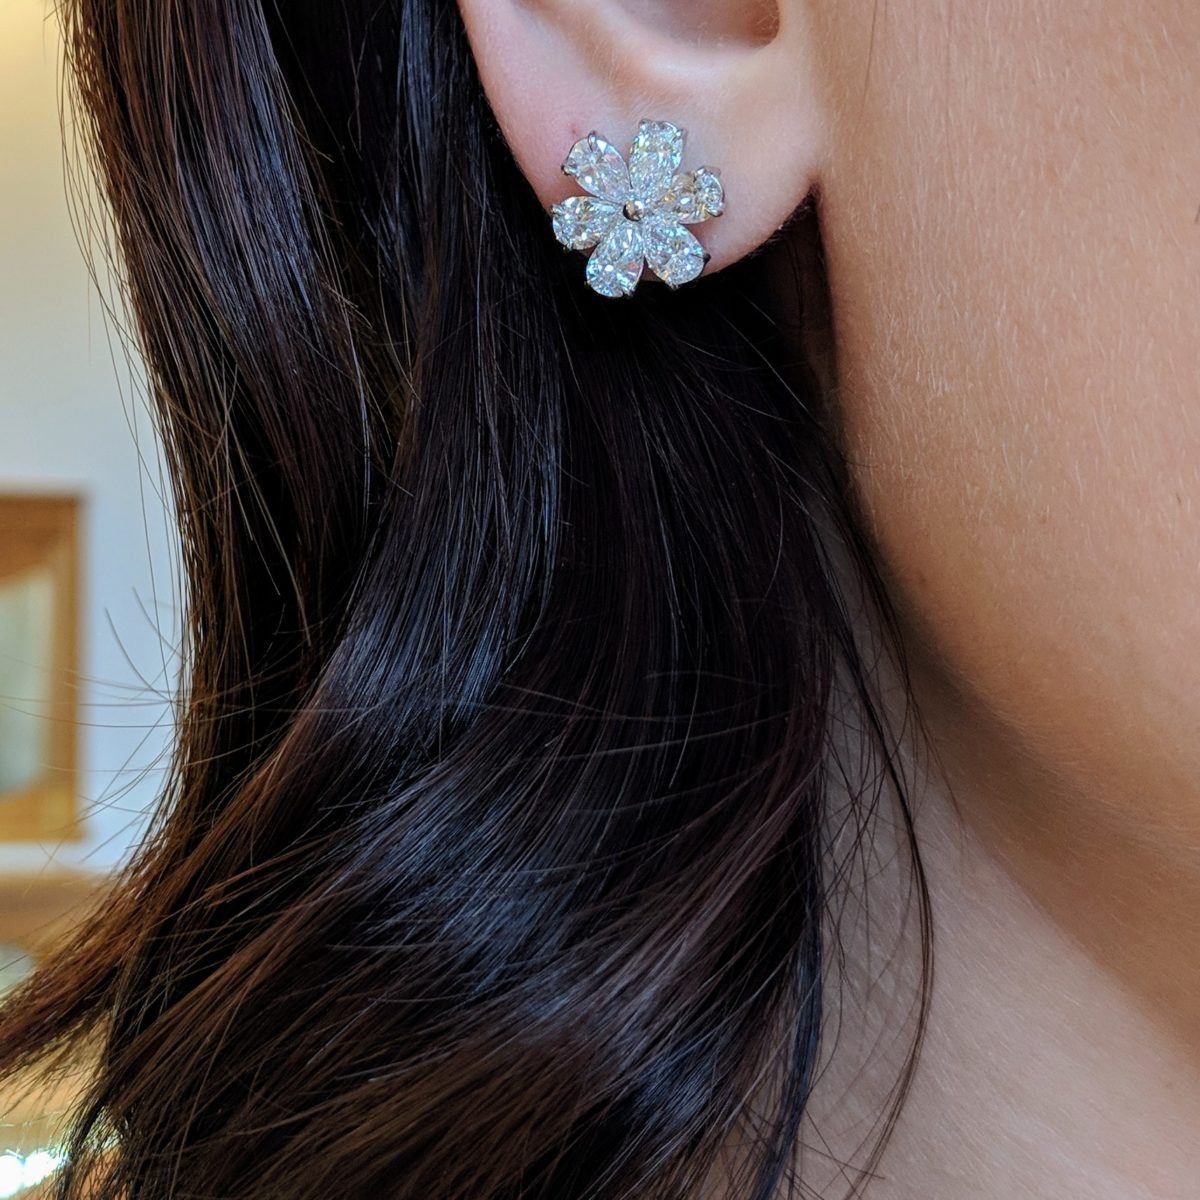 Diamond Flower Stud Earrings